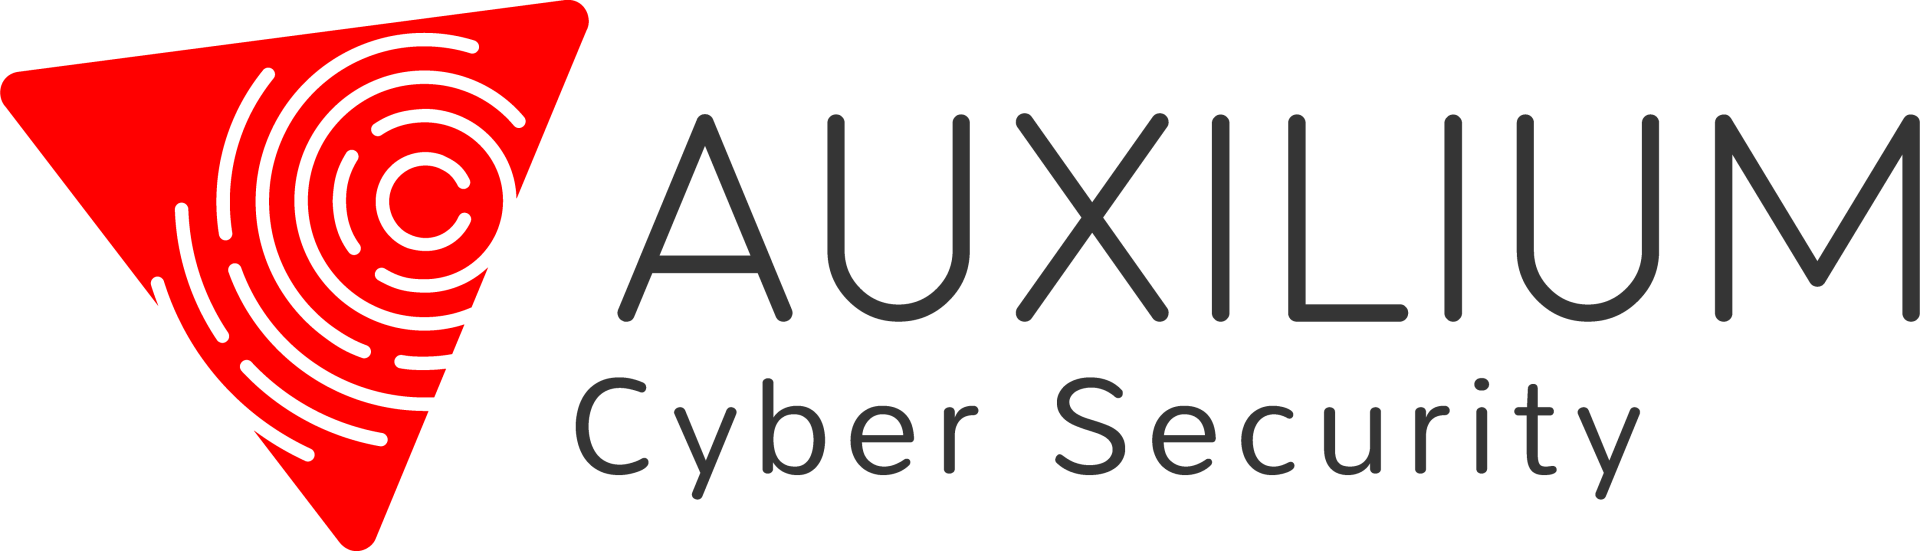 Auxilium Cyber Security, SCADA Conference Coffee Break Partner